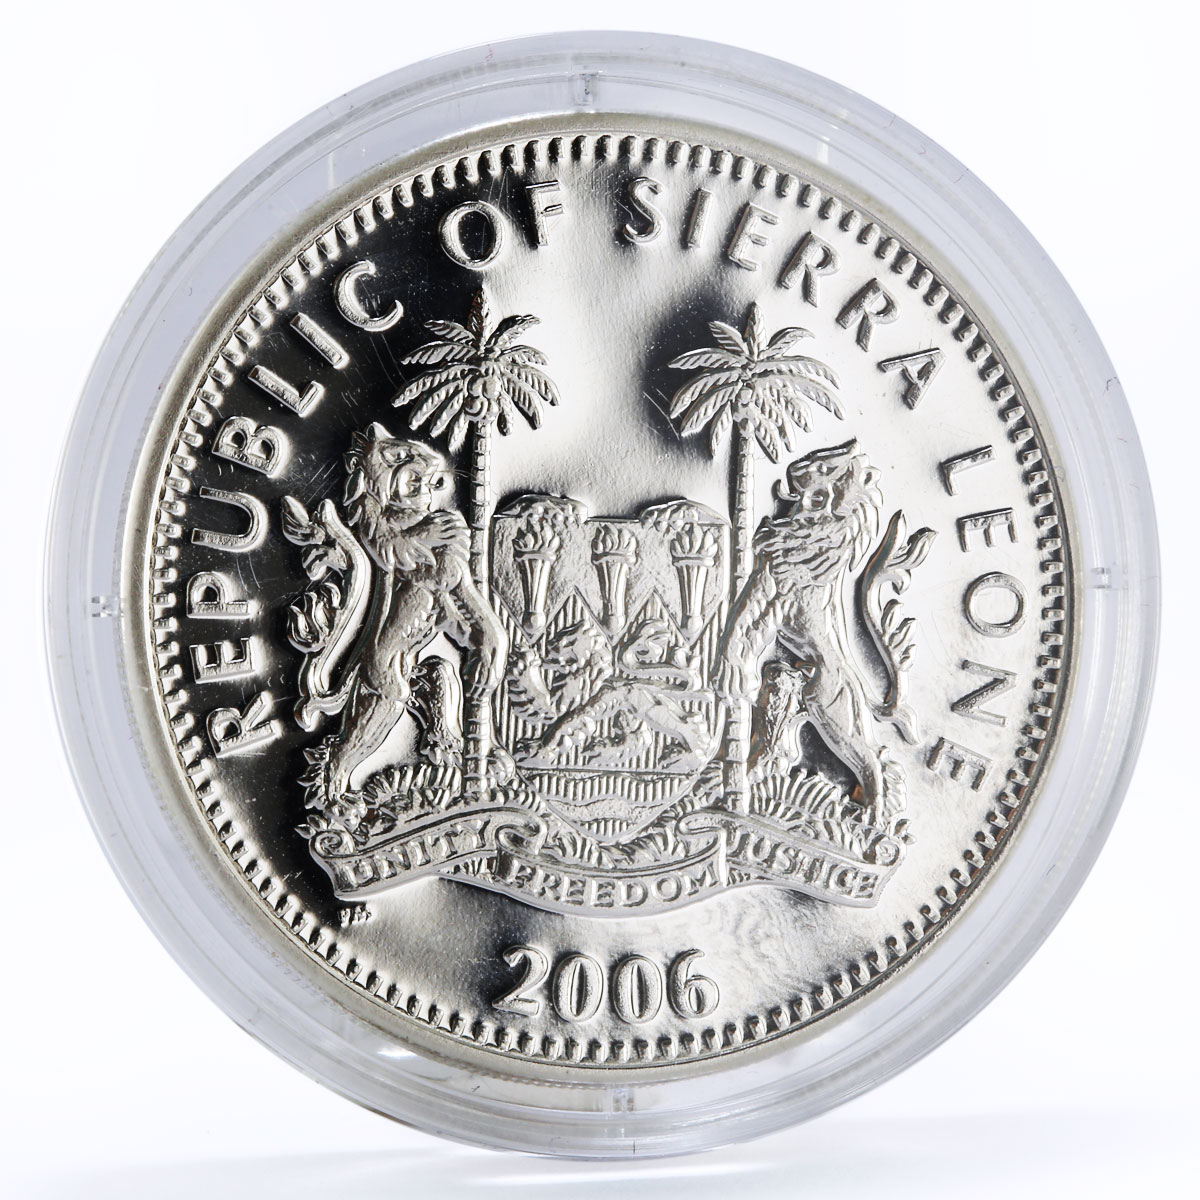 Sierra Leone 10 dollars Endangered Wildlife series Lion proof silver coin 2006